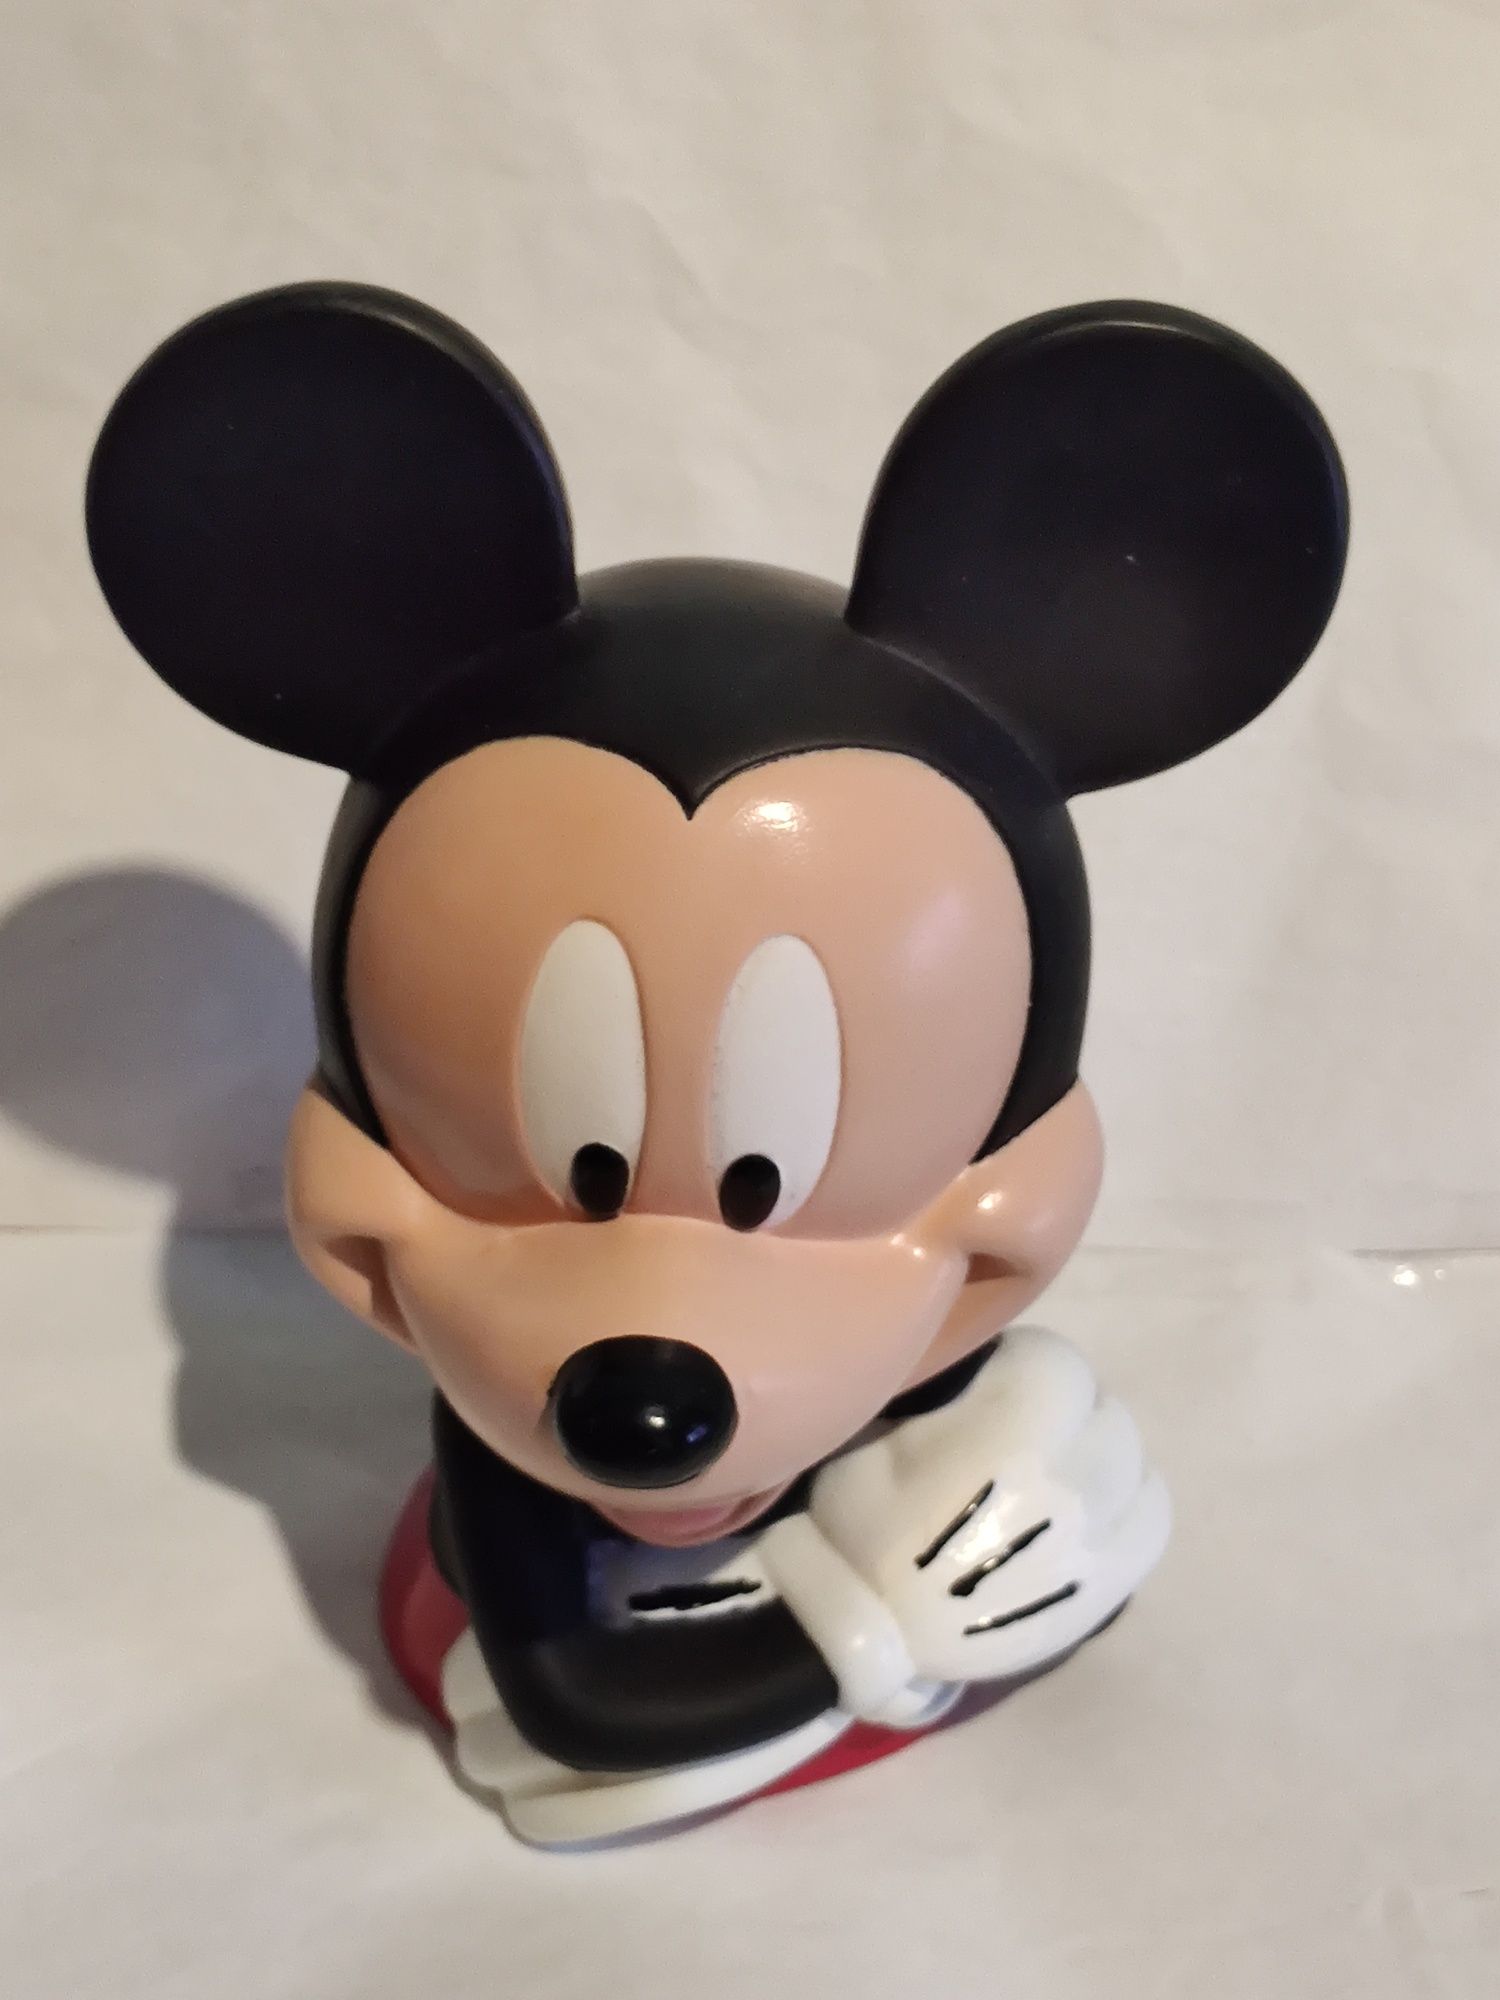 Mealheiro da Disney do Mickey mouse